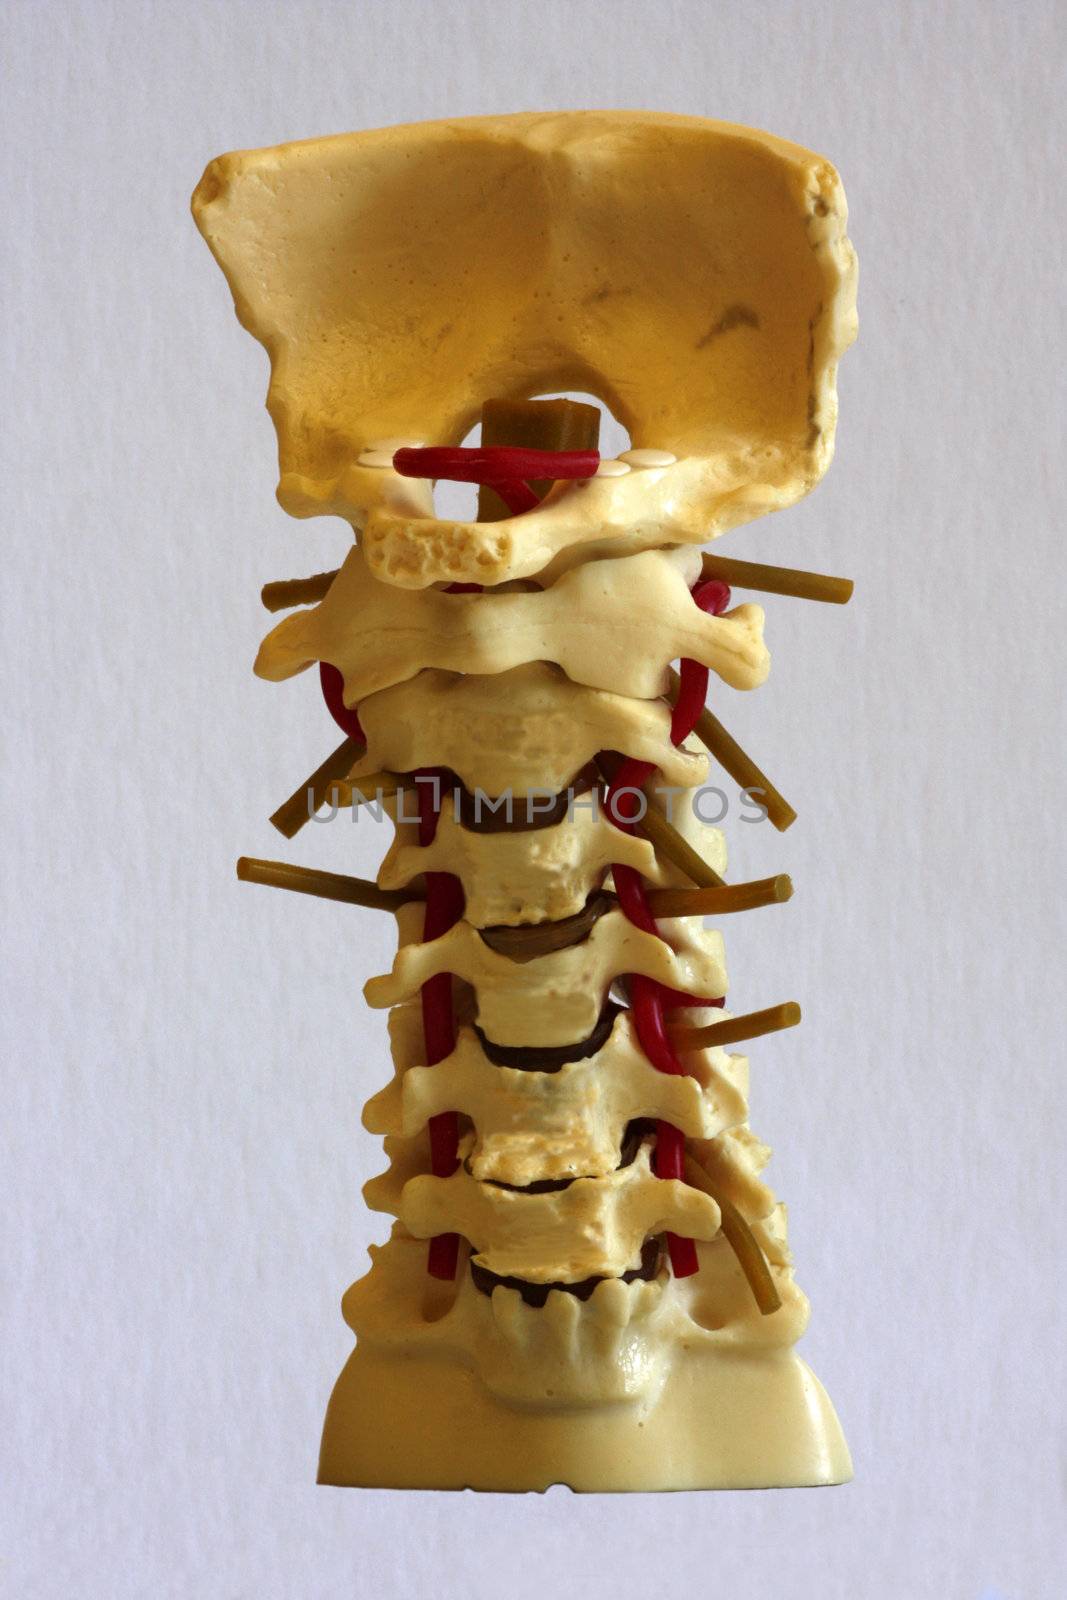 Human Spine by Imagecom